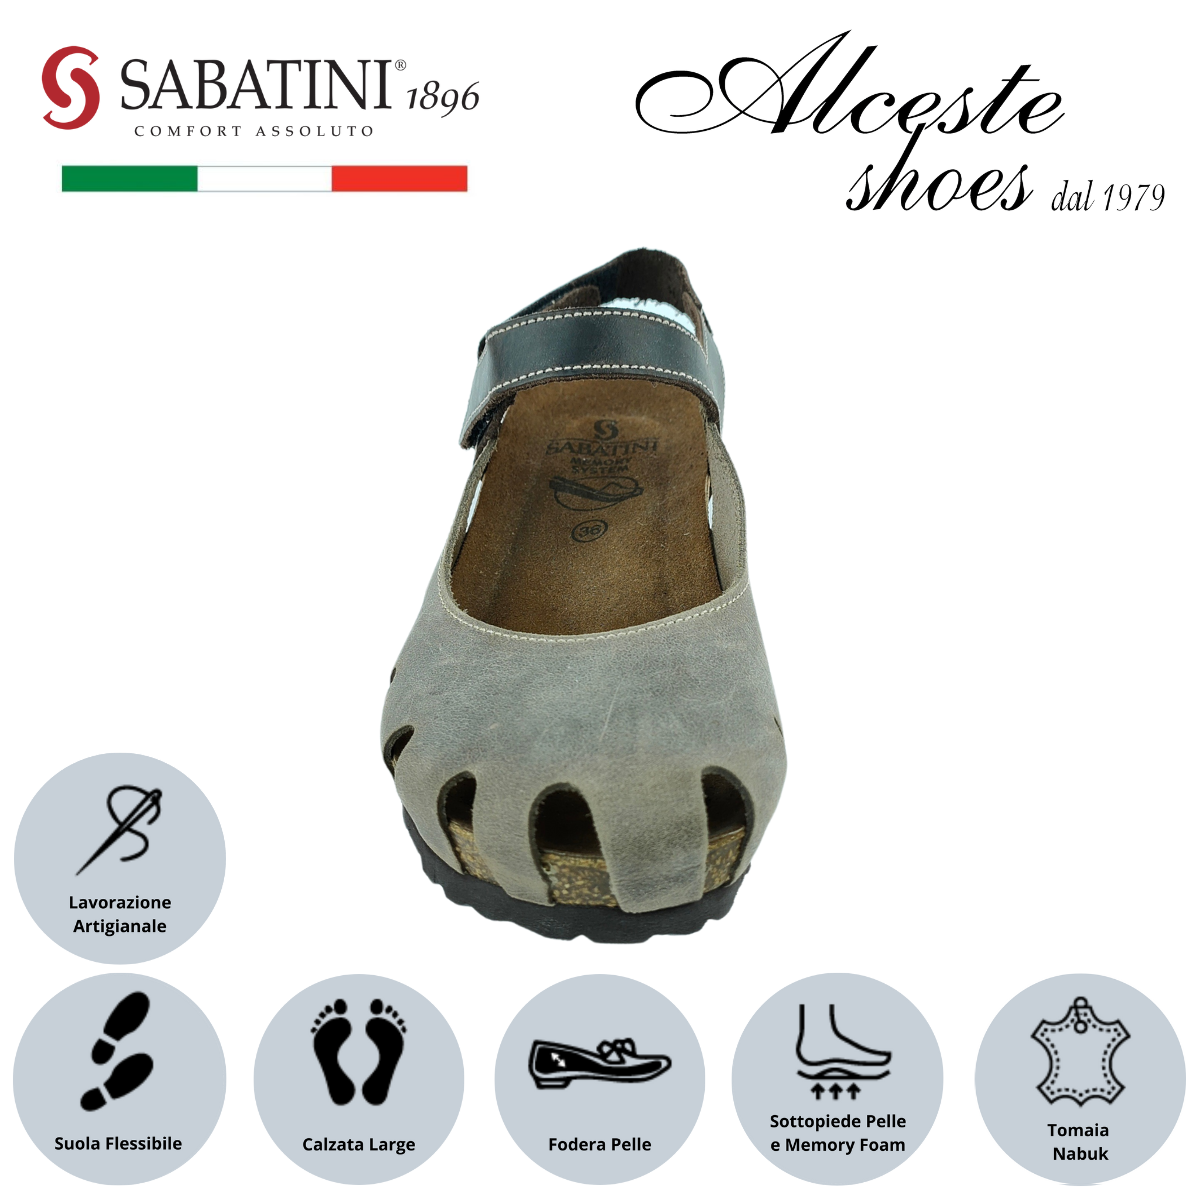 Sandalo Donna con Punta Chiusa "Sabatini" Art. 4009 in Nabuk Fango e Testa di Moro Alceste Shoes 26